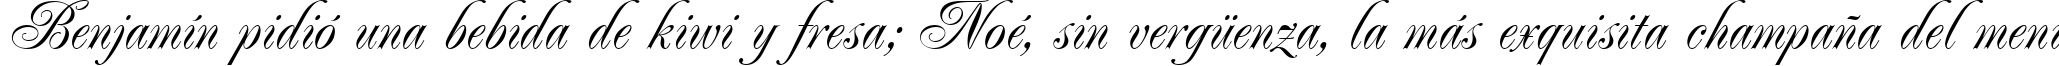 Пример написания шрифтом Majestic текста на испанском